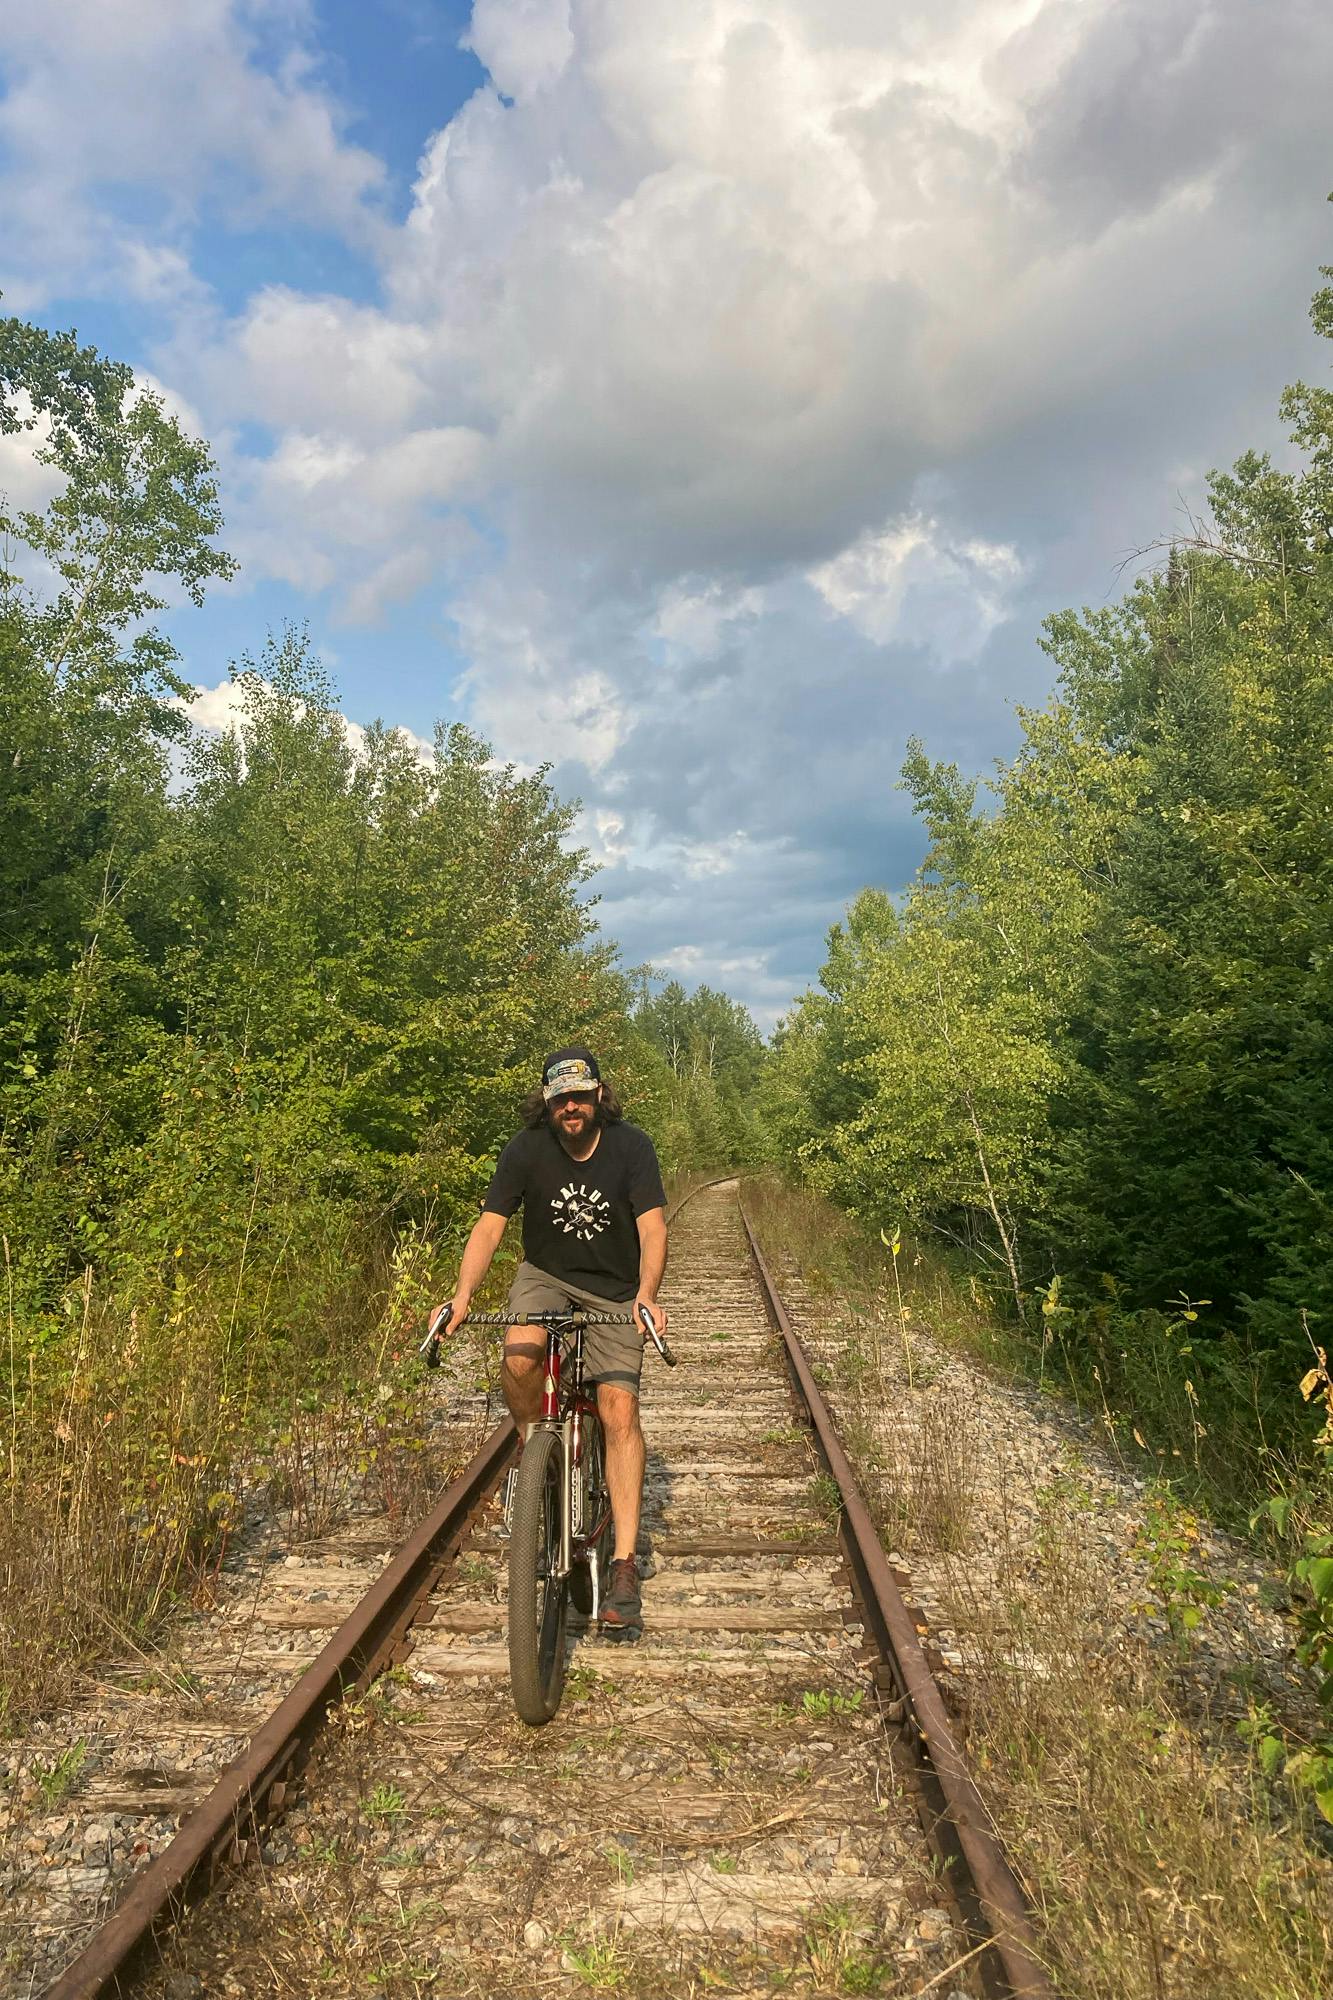 Frank riding a bike along a train track.